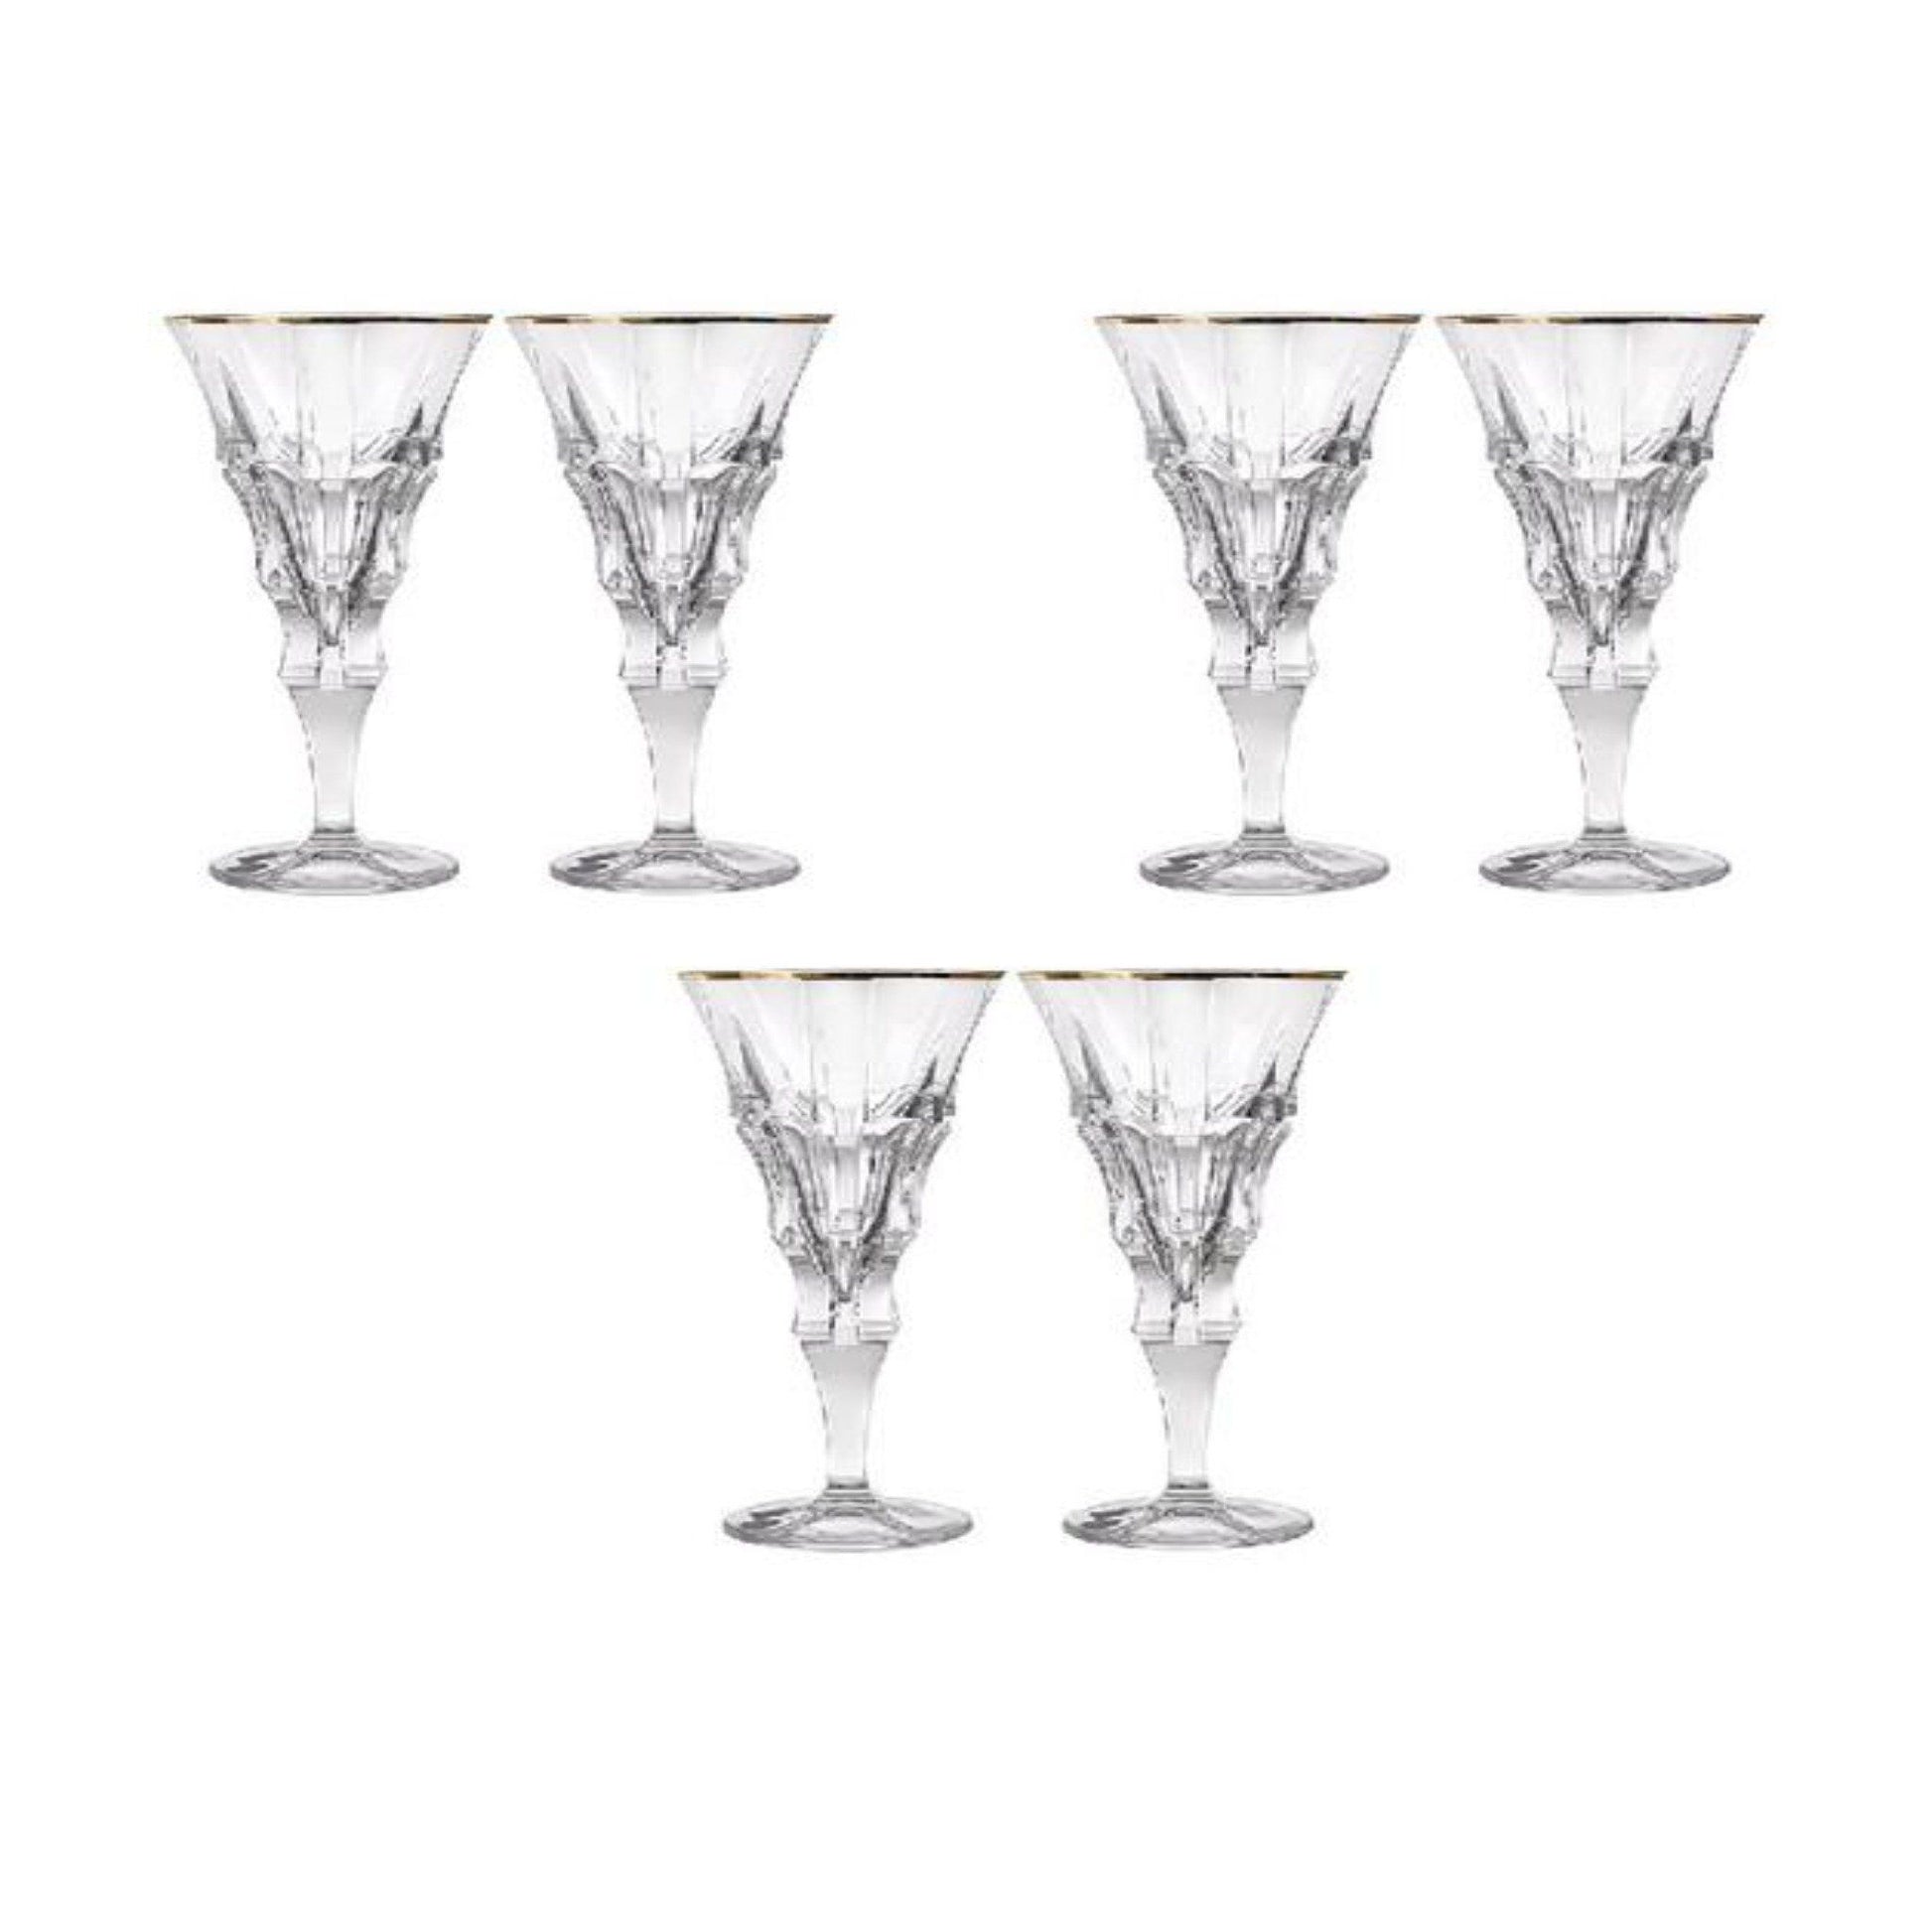 Bohemia Crystal Glass Set Of 6 Pieces - 270009 - 180 ml -Transparent